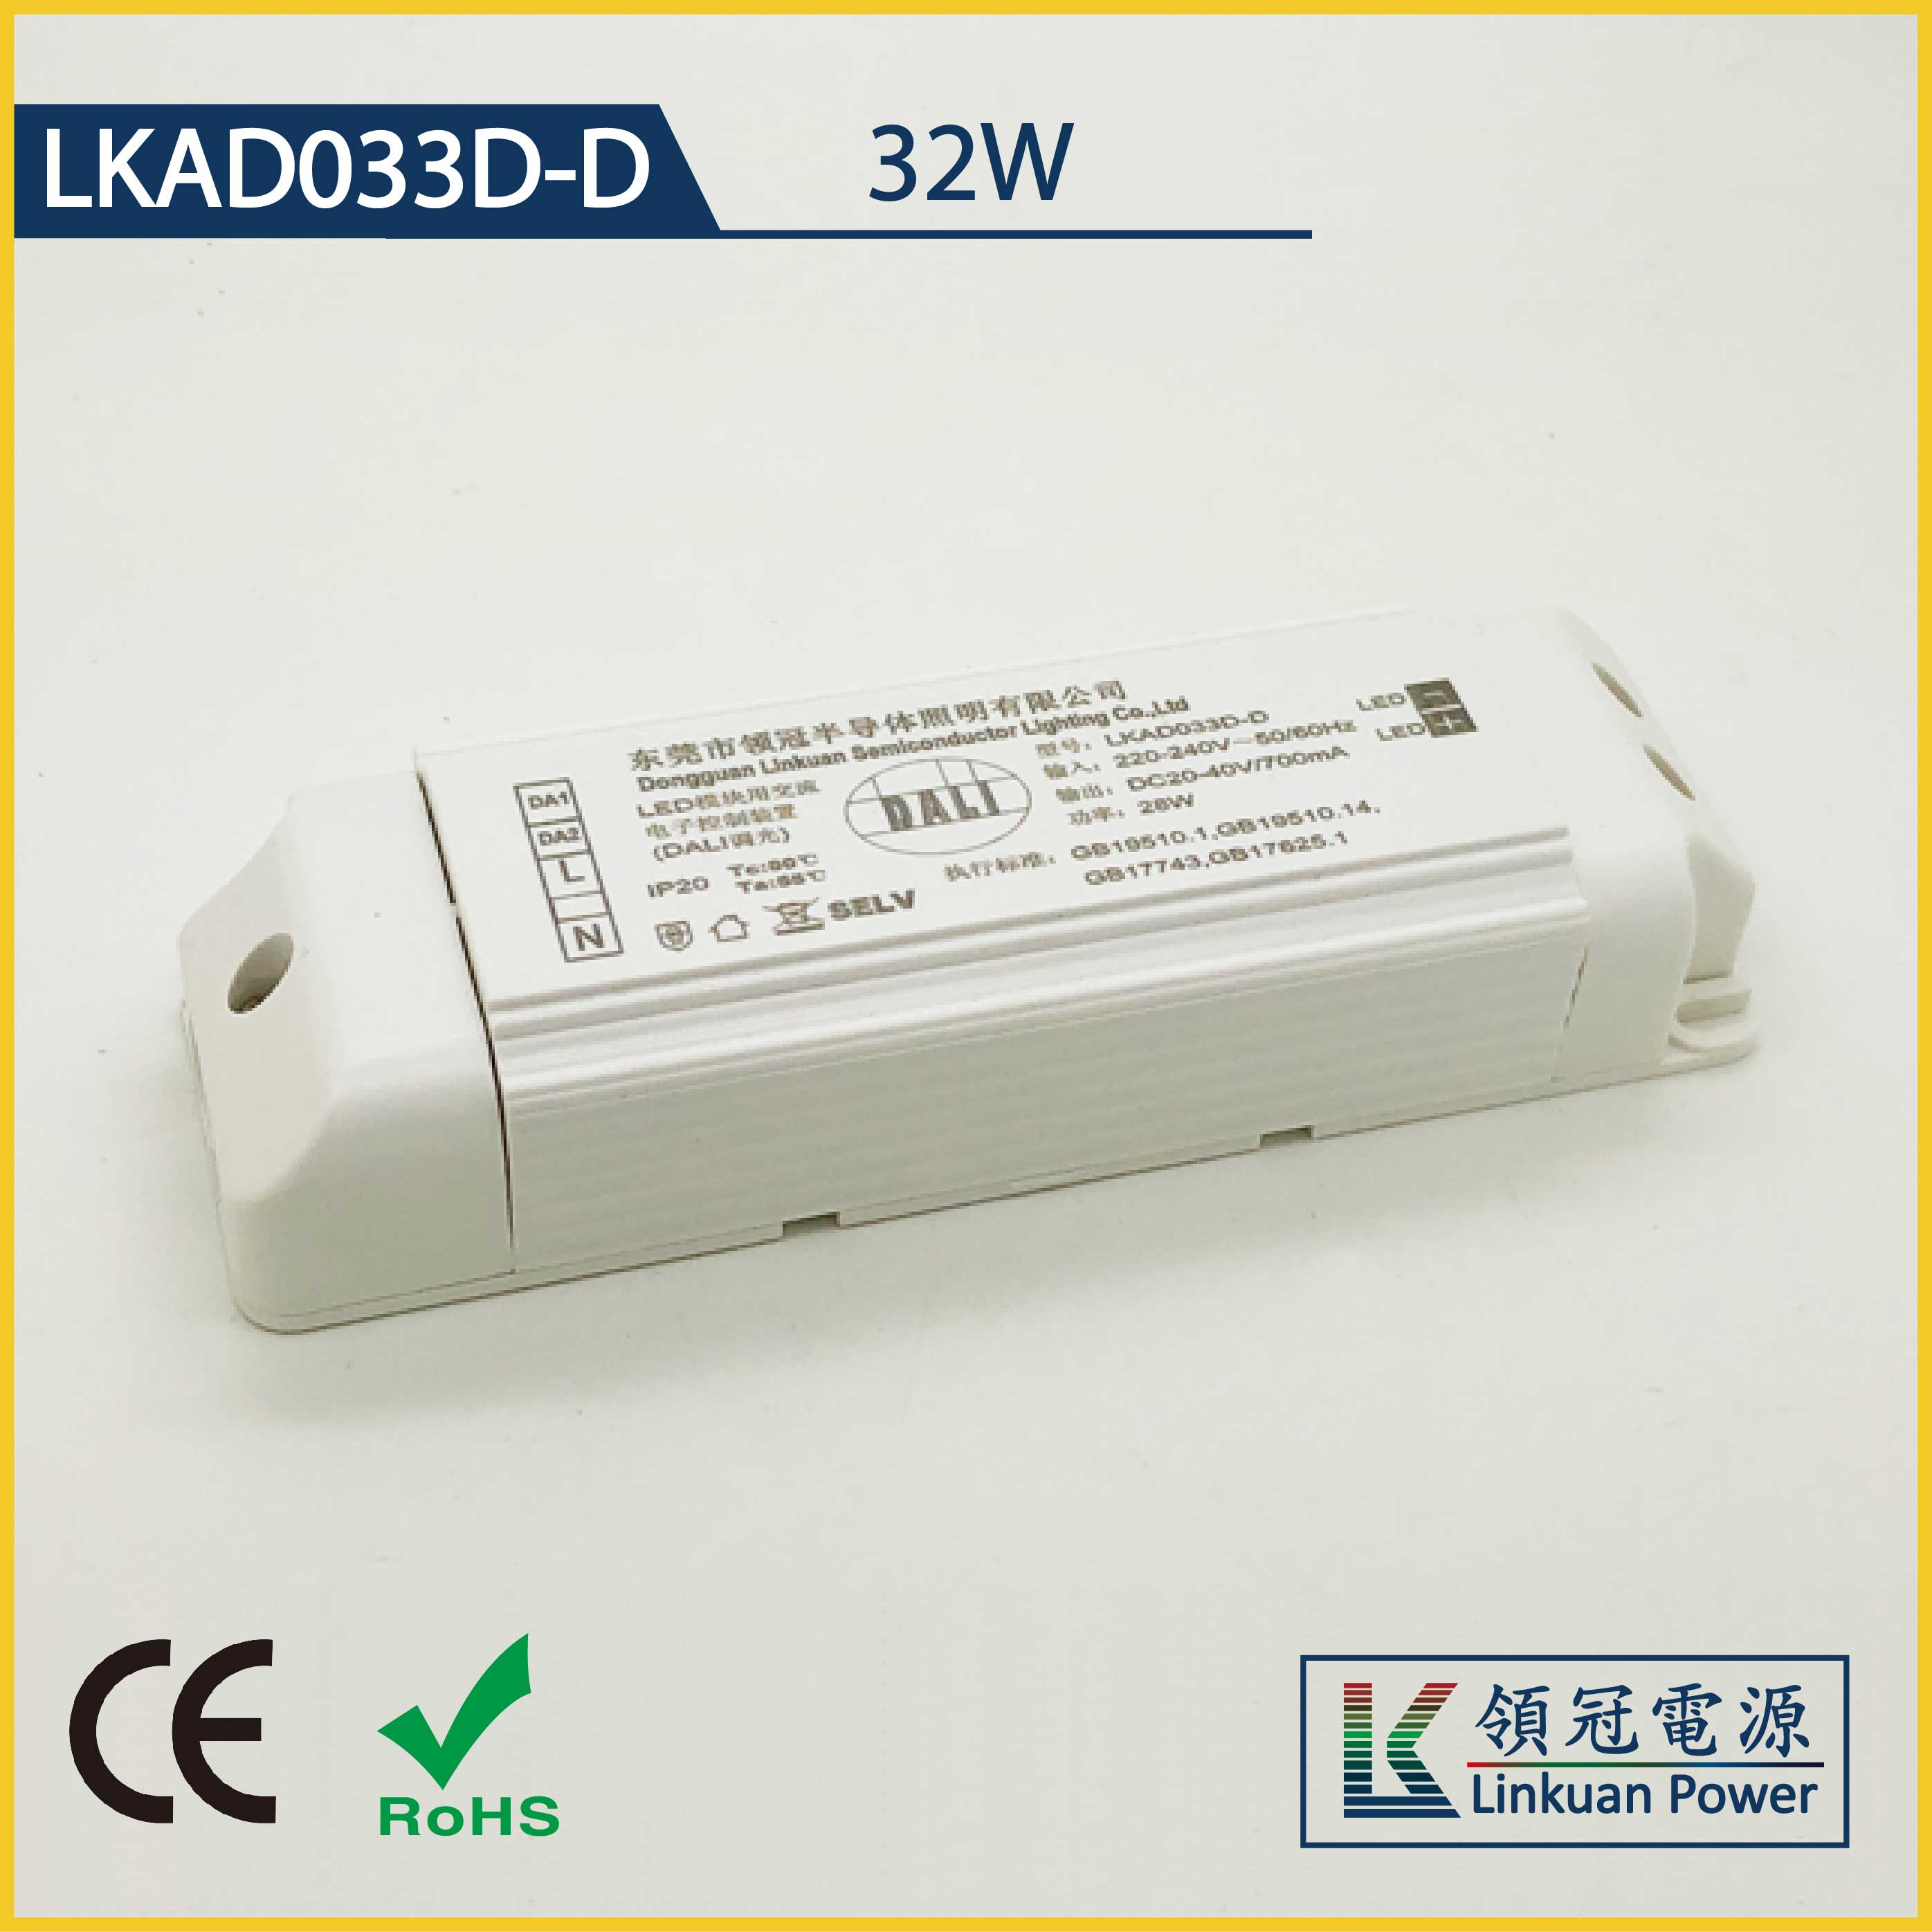 LKAD033D-D 32W 10-42V 800mA DALI Dimming LED drivers